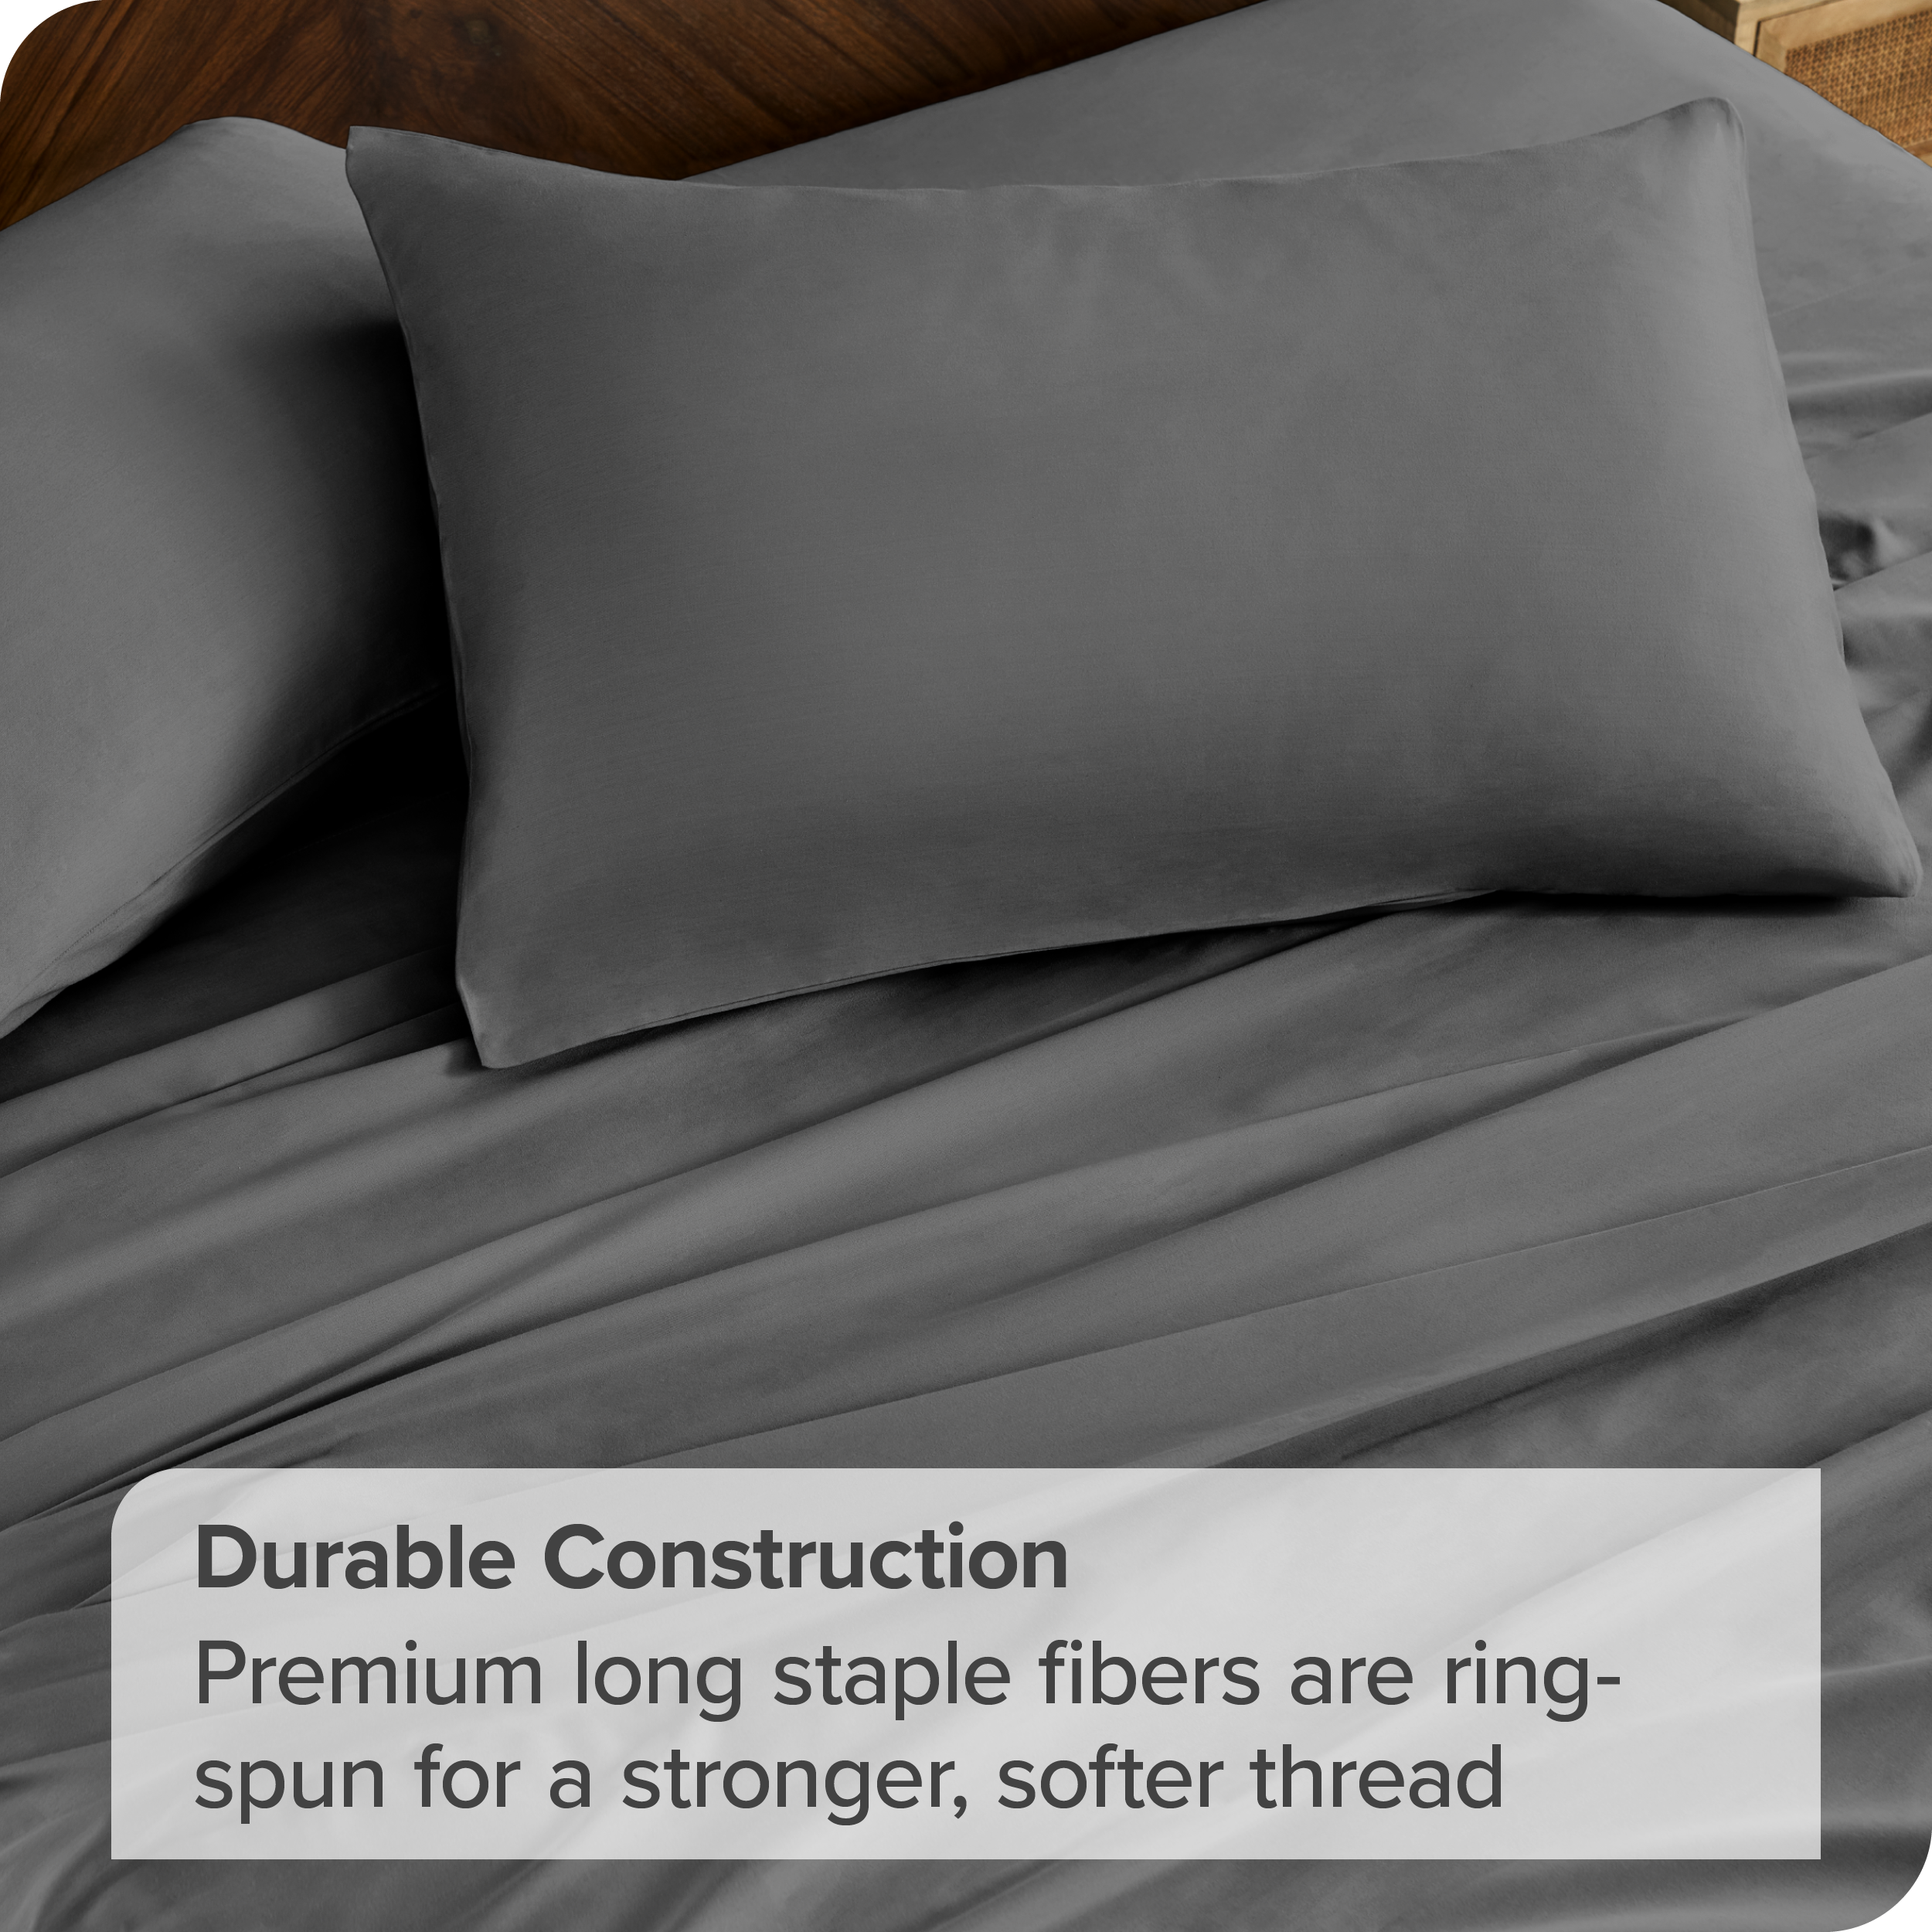 Bare Home 100% Organic Cotton Sheet Set - Crisp Percale Weave - Lightweight & Breathable